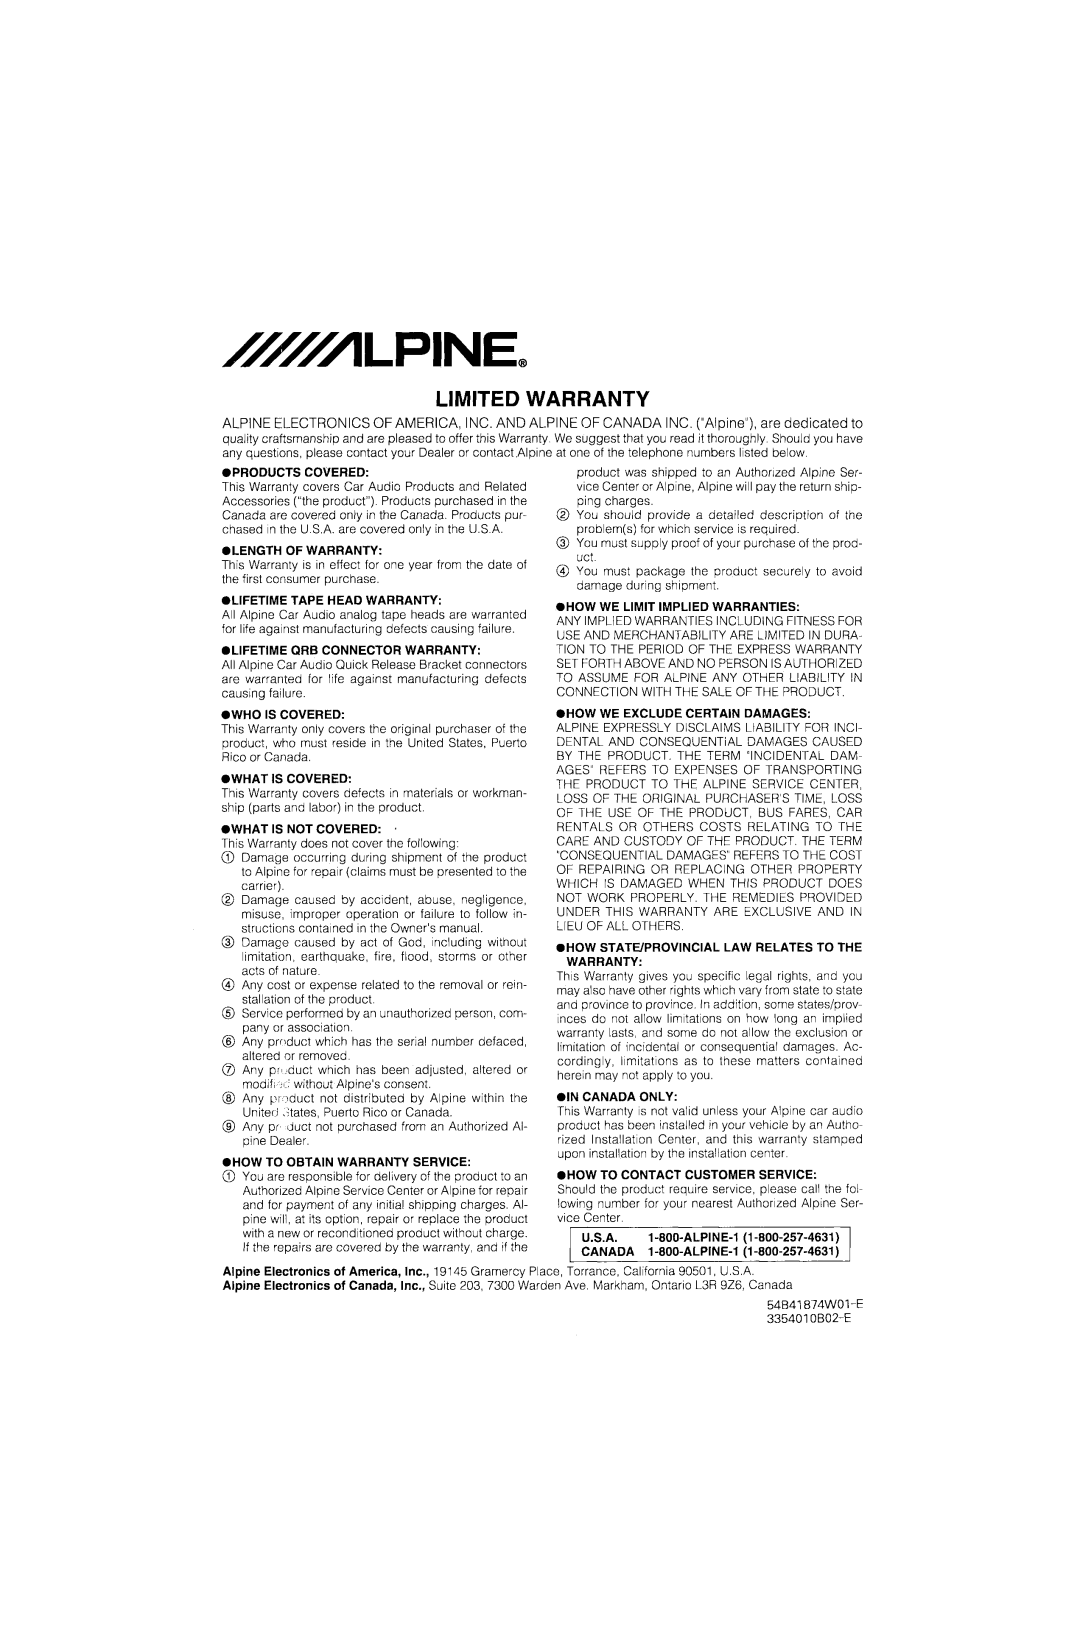 Alpine MRD-M1000 owner manual 